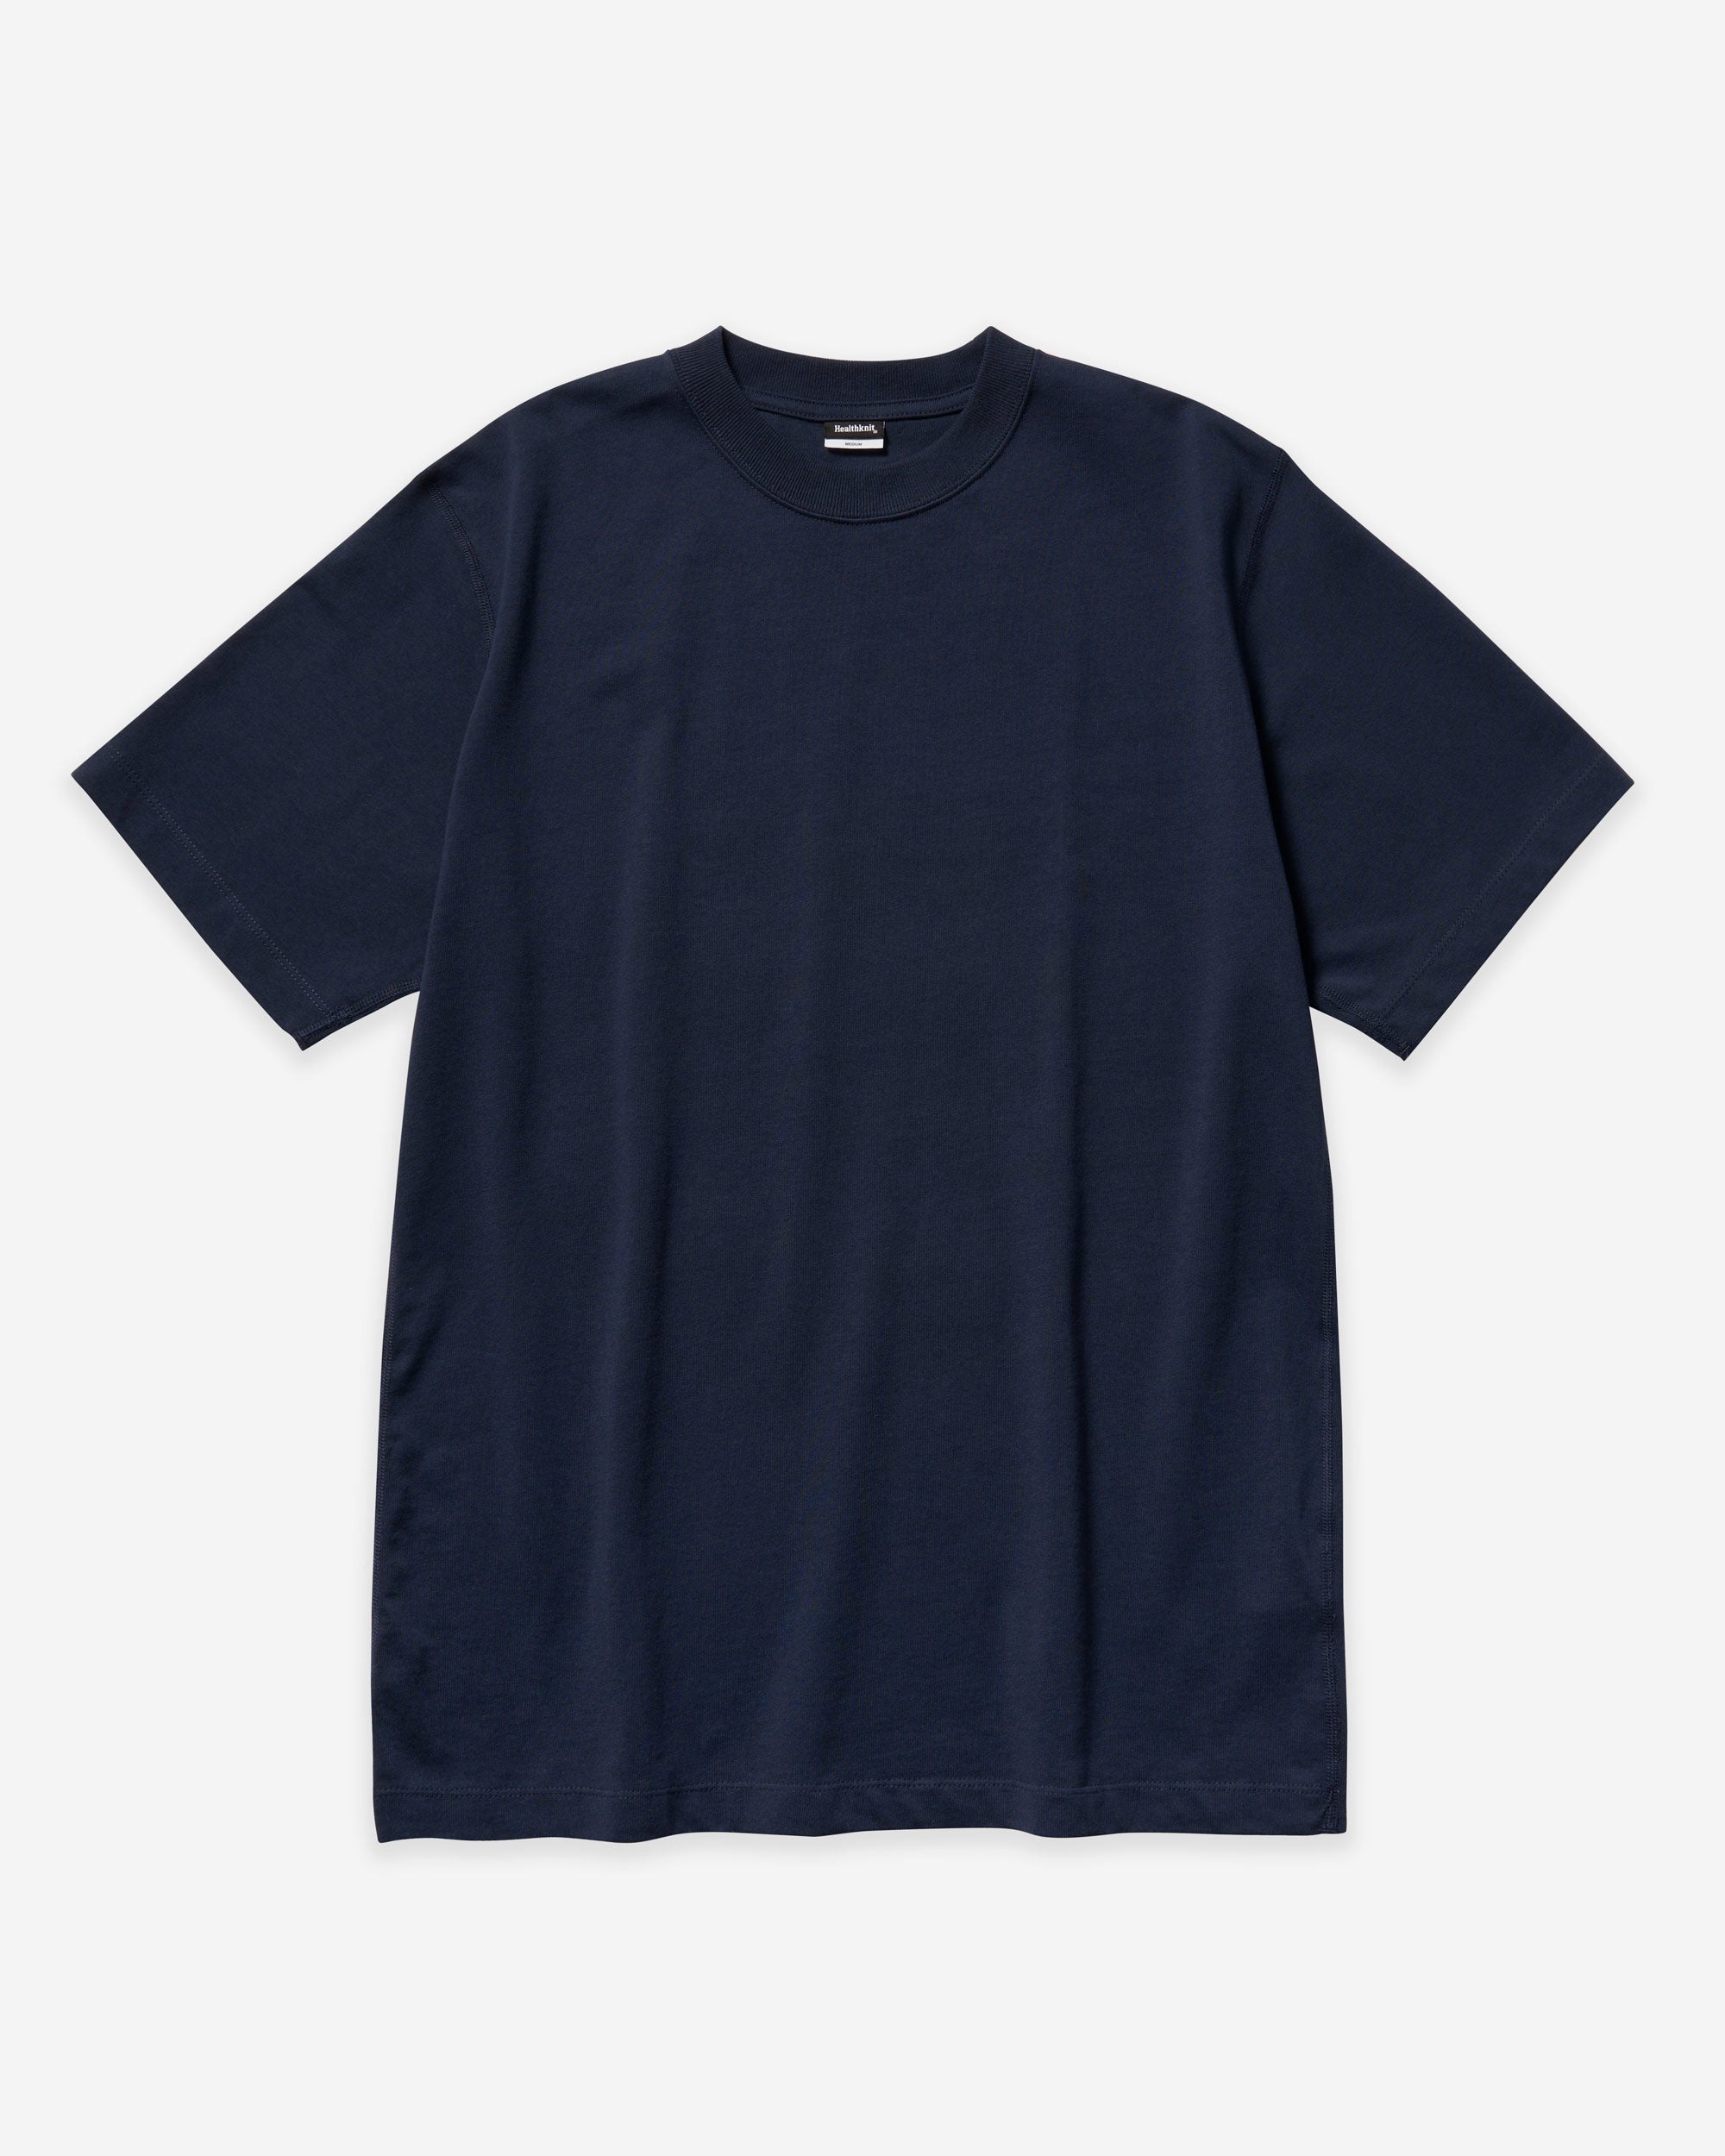 S/S T-Shirt - Navy